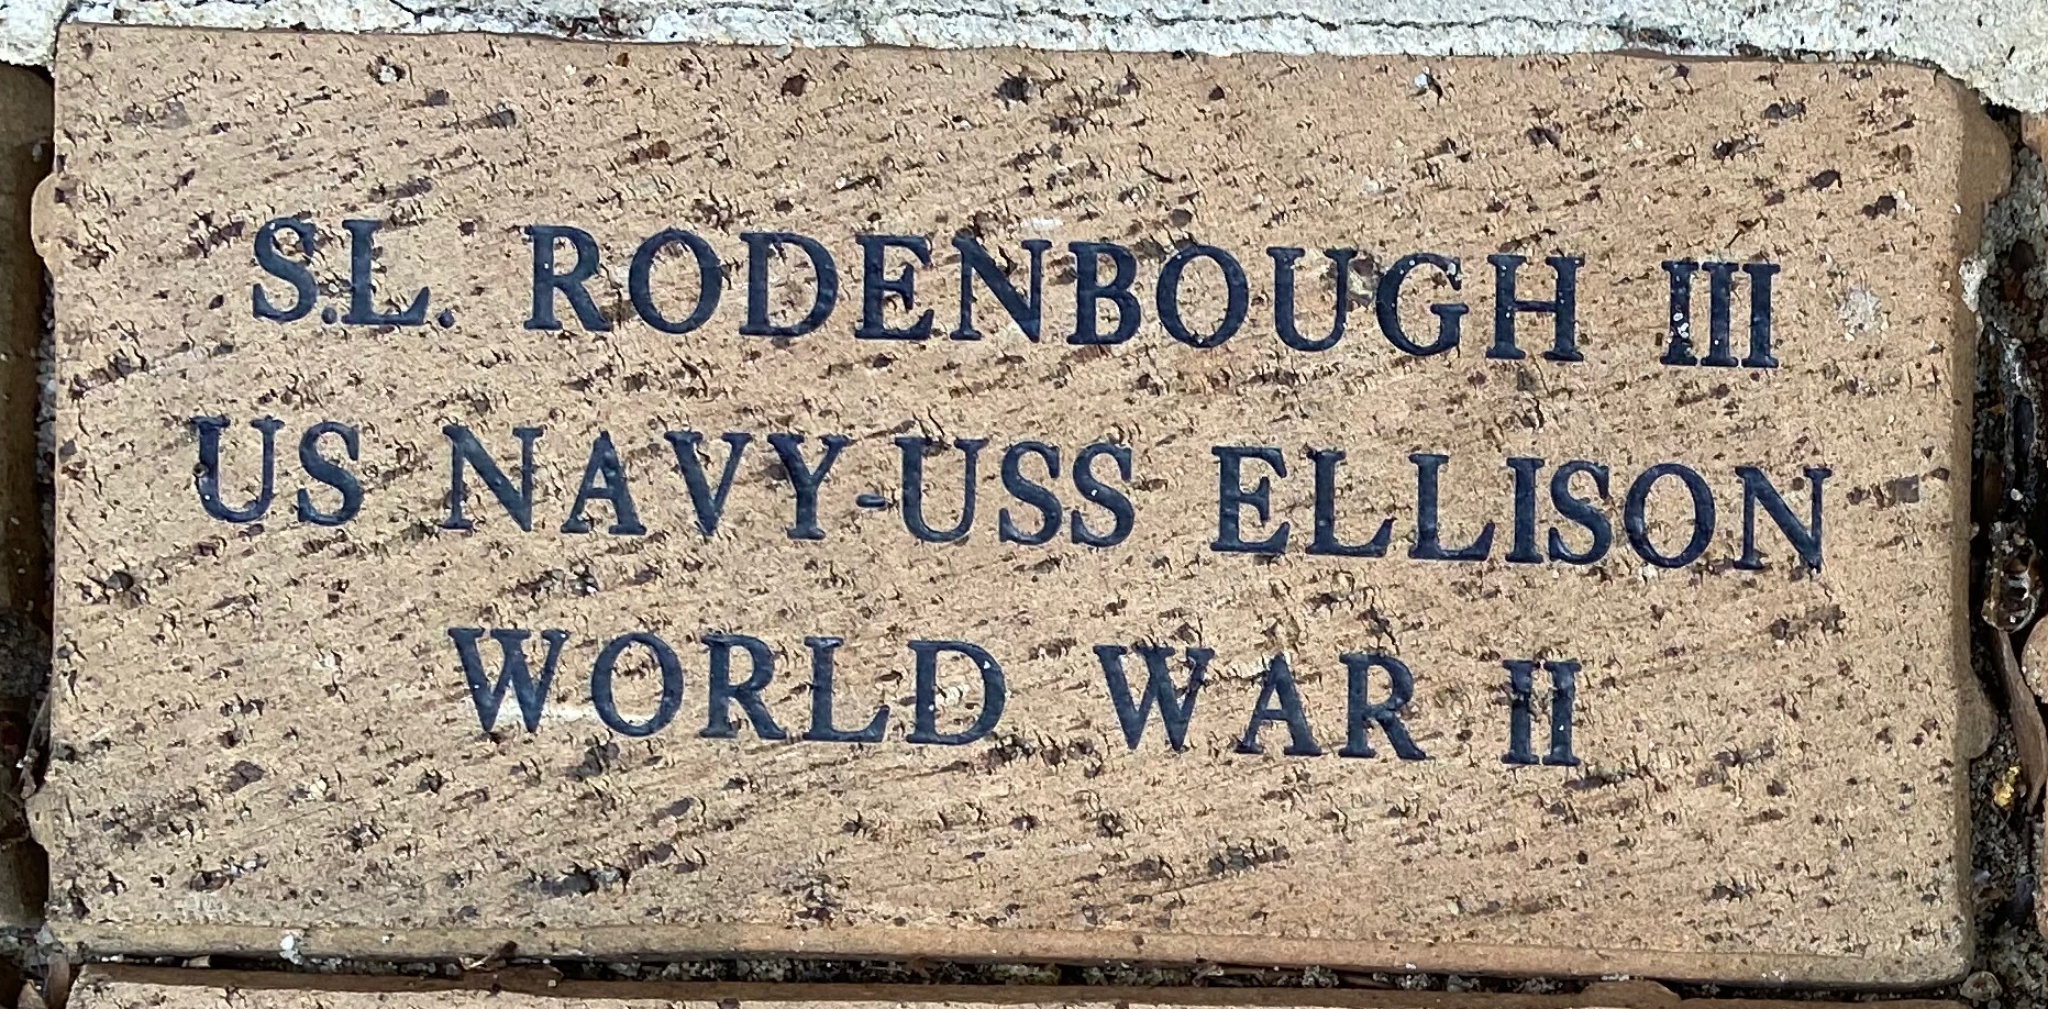 S.L. RODENBOUGH III US NAVY-USS ELLISON WORLD WAR II